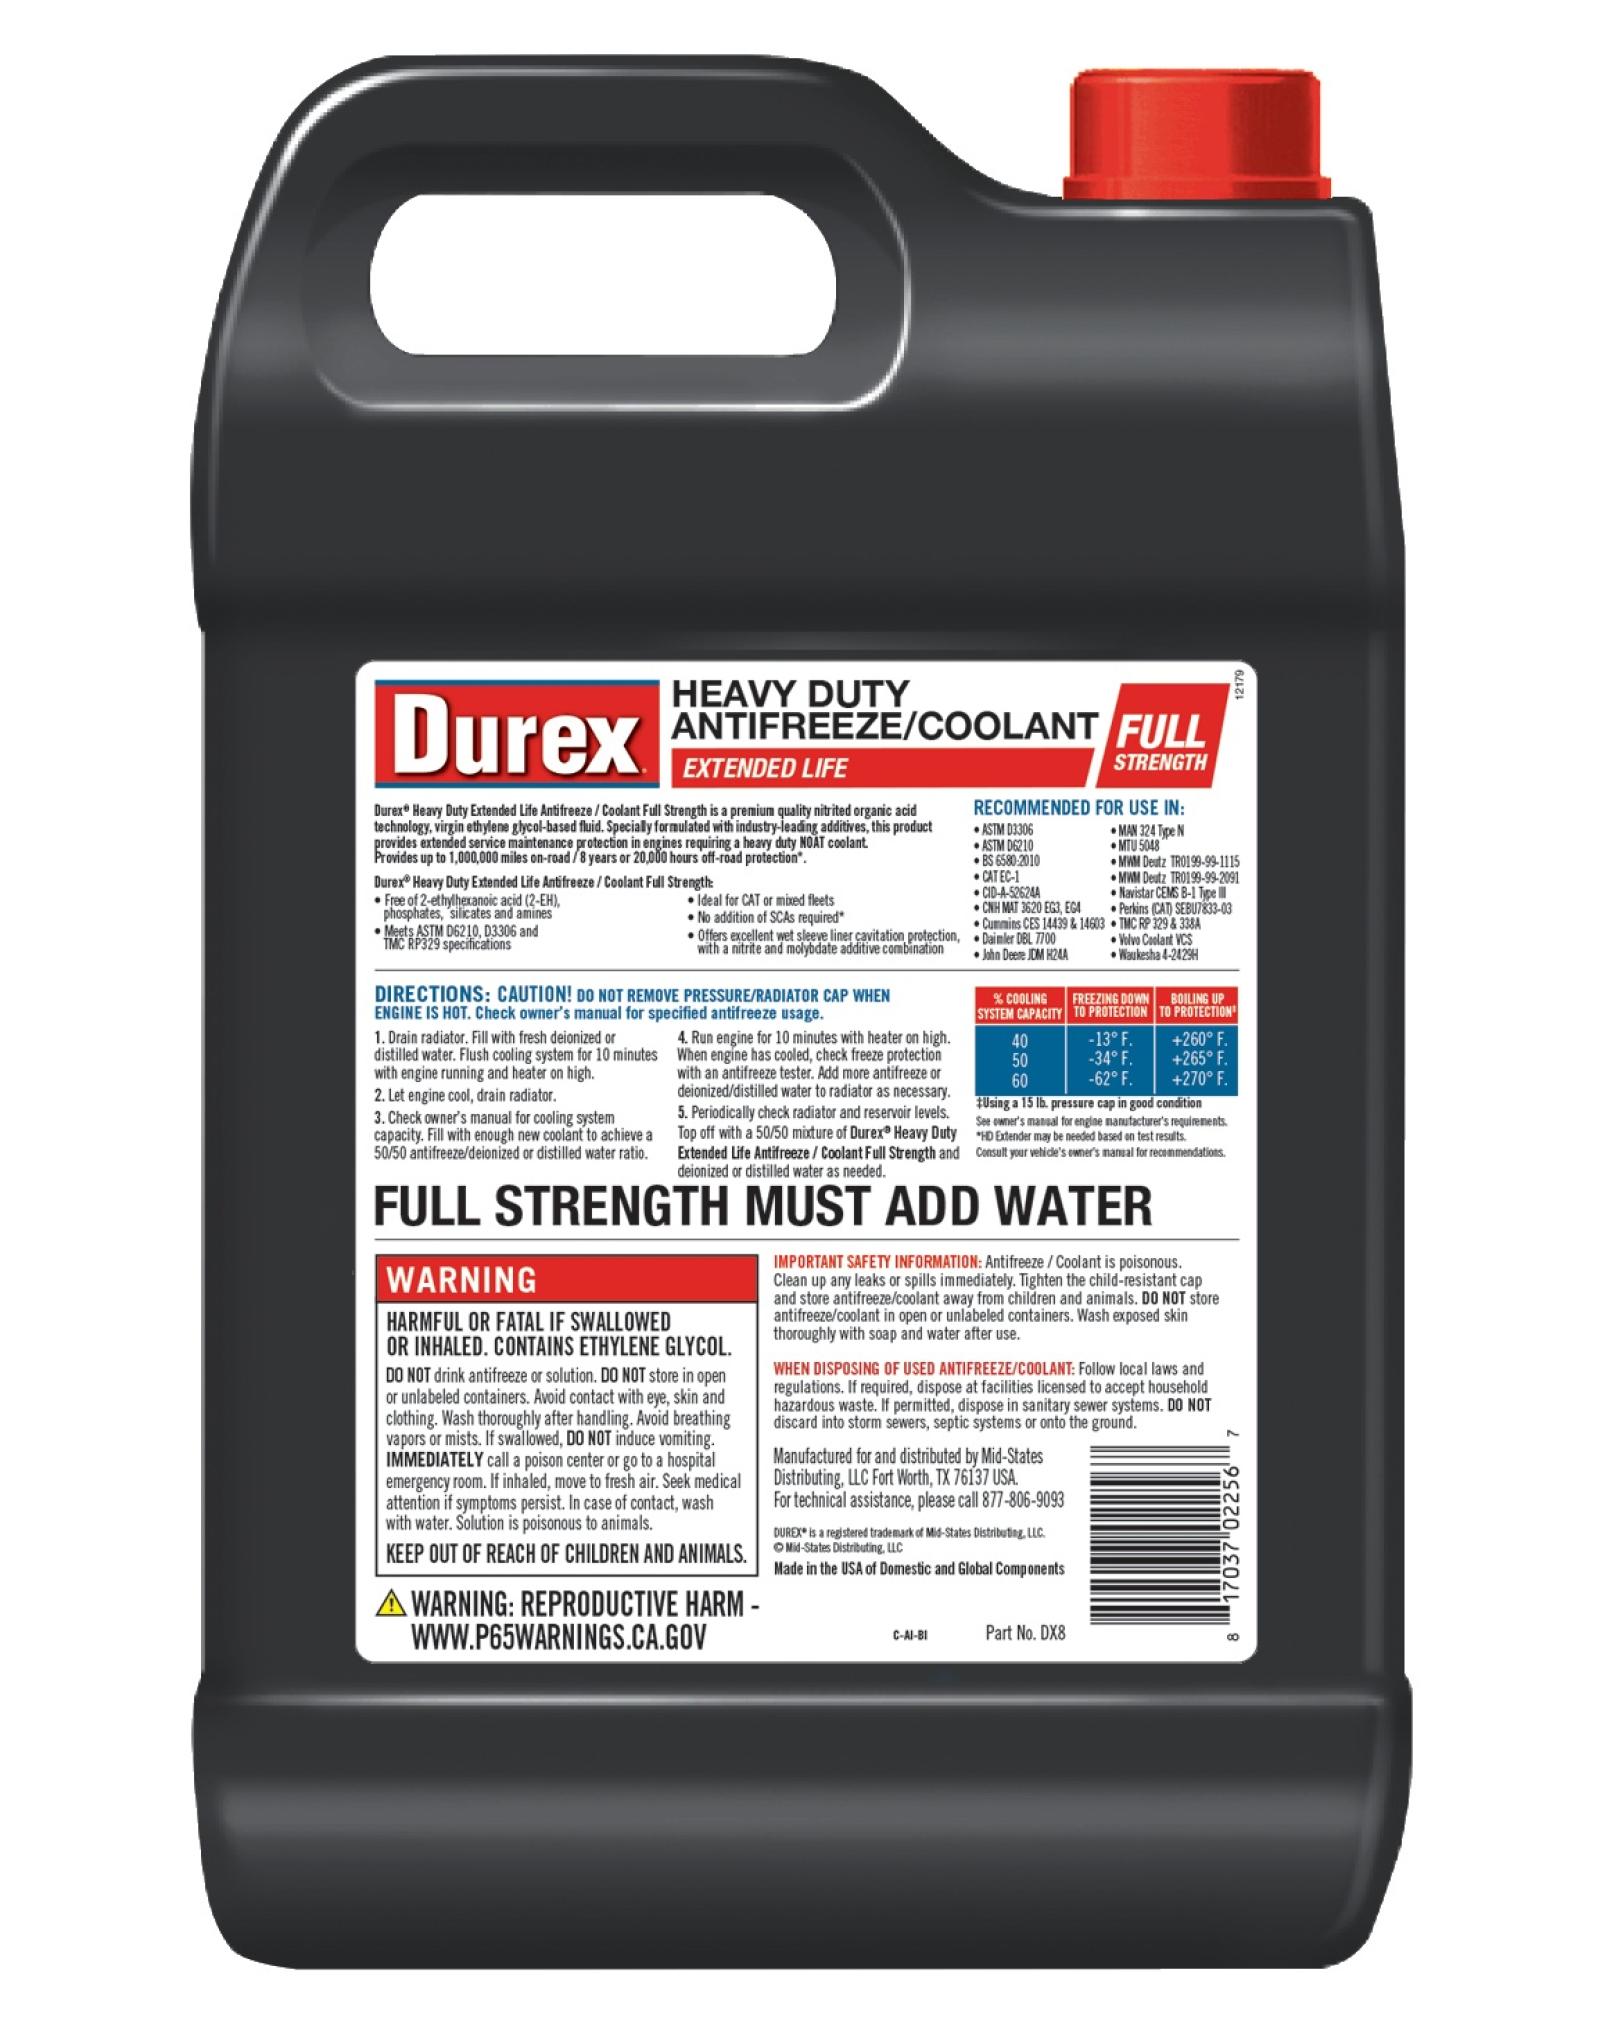 durex-heavy-duty-extended-life-formula-antifreeze-coolant